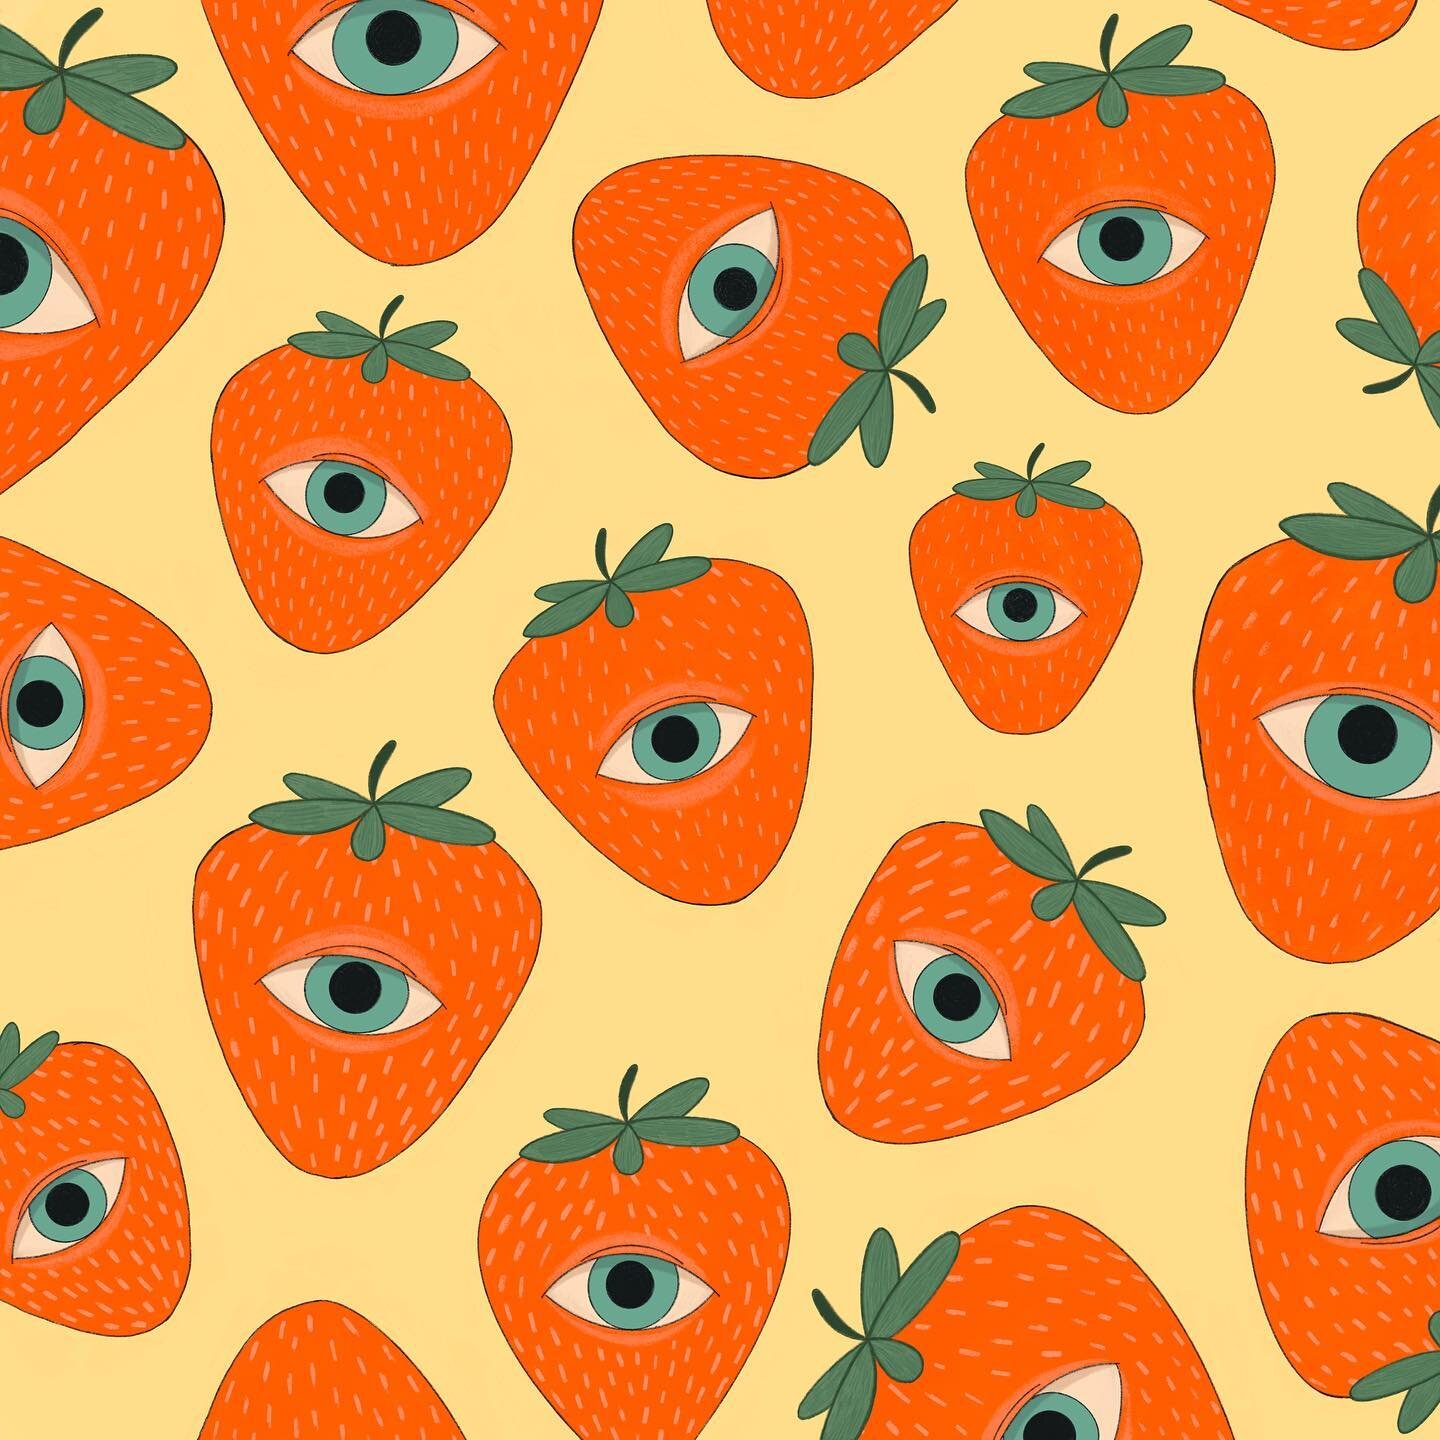 🍓👀
.
.
.
.
.
.
#art #artist #artistsoninstagram #illustration #illustrator #illustrationartists #illustratorsoninstagram #procreate #digitalillustration #digitalart #plants #fruit #summer #halloween #spooky #strawberry #eye #colorful #strawberryill